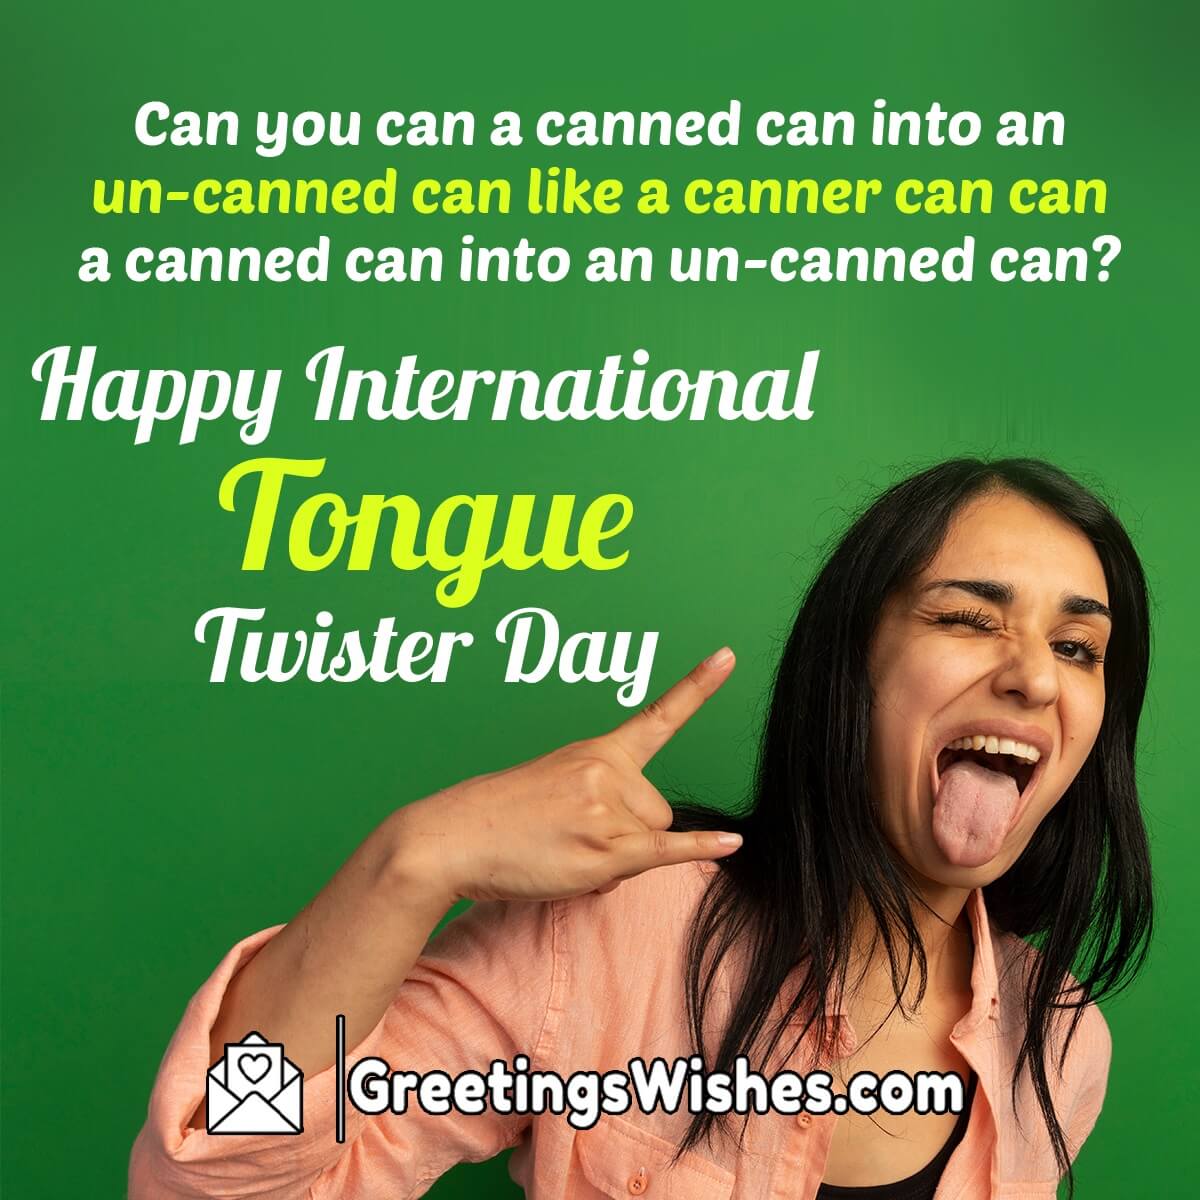 International Tongue Twister Day Image